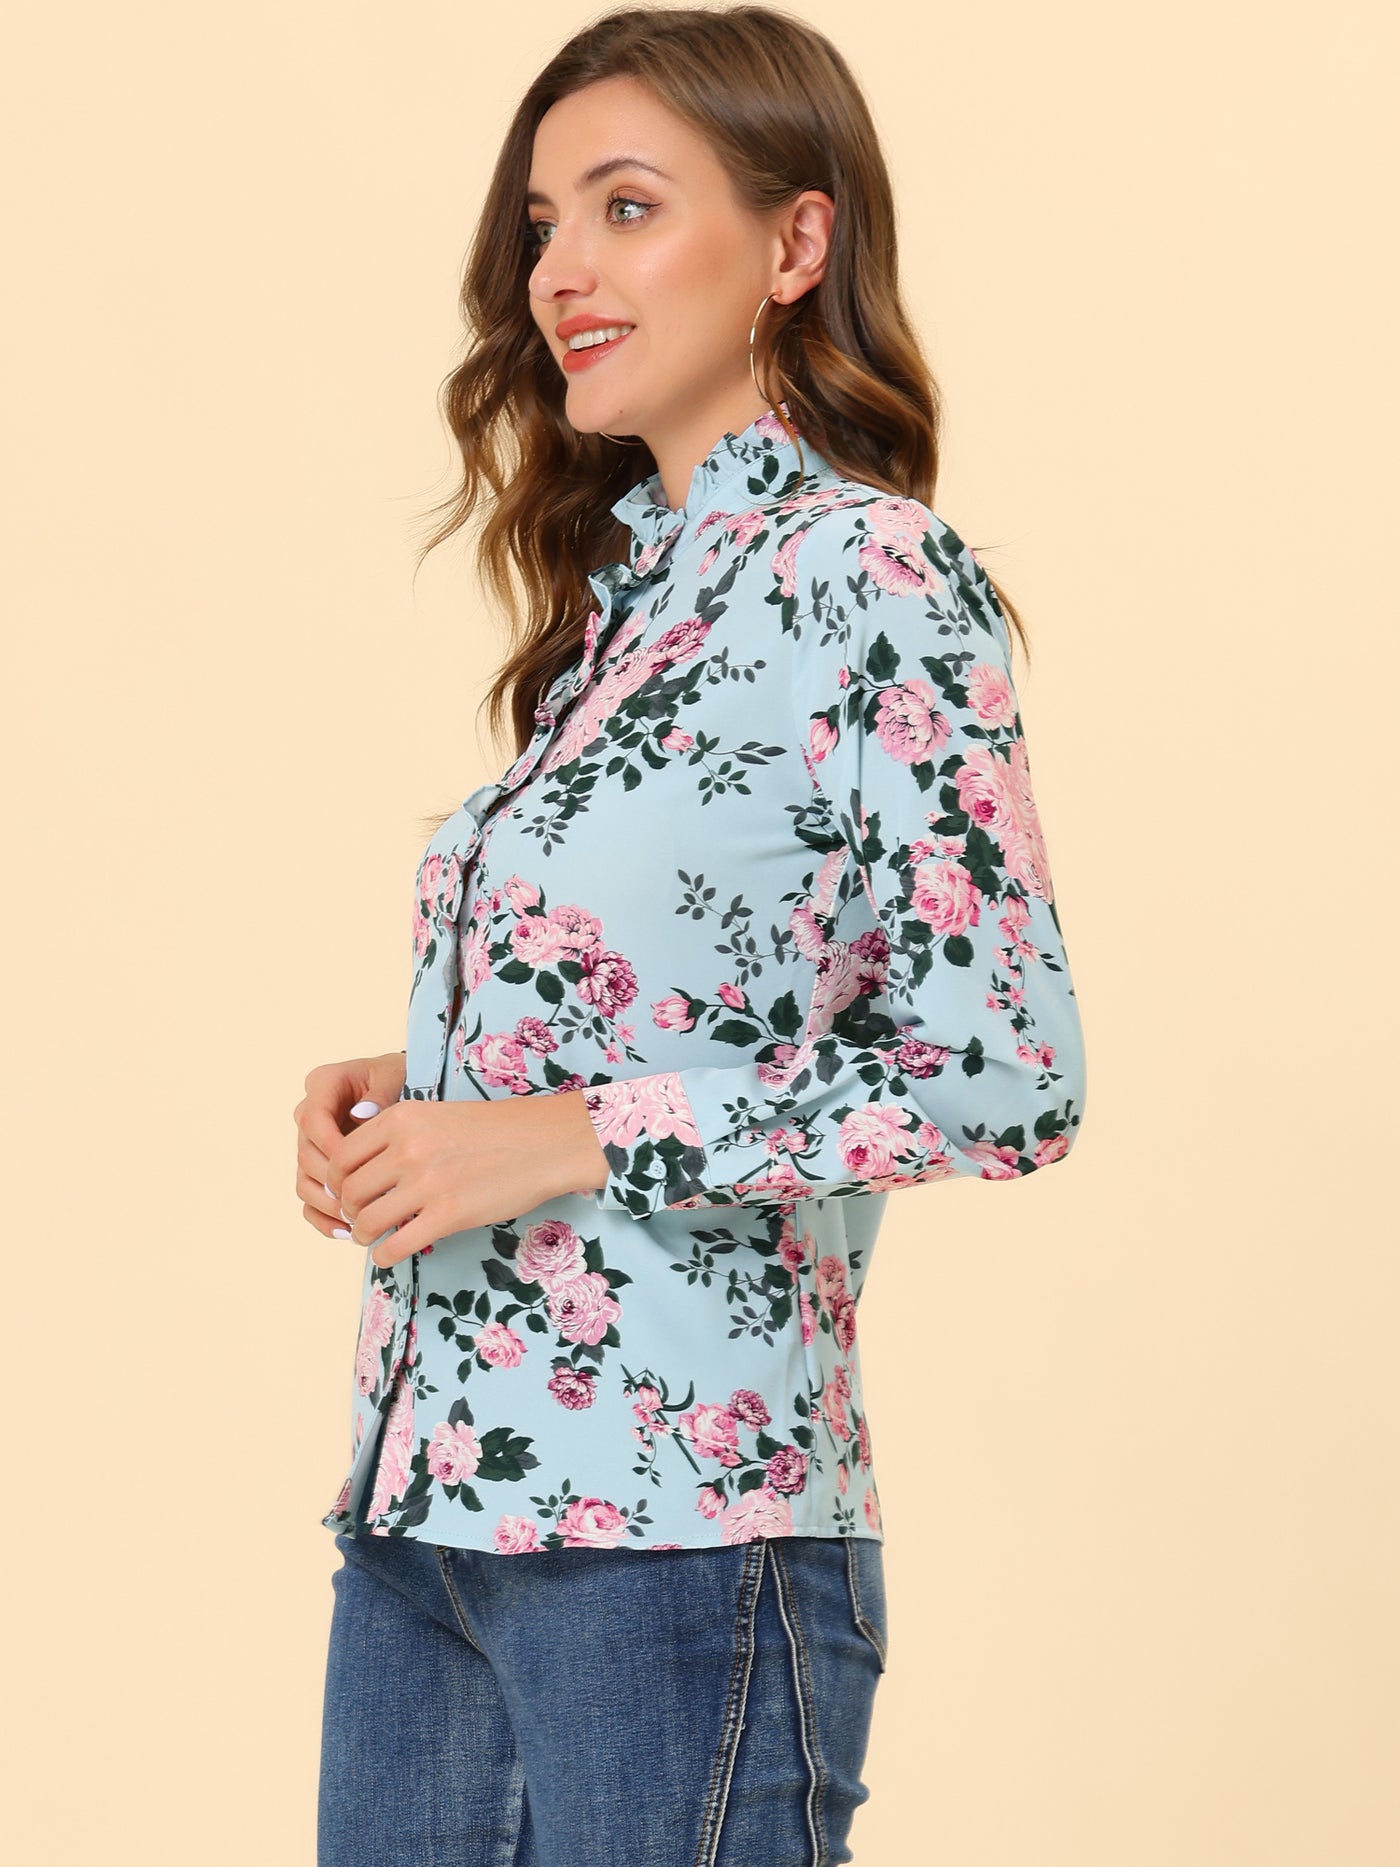 Allegra K Floral Flower Printed Shirt Ruffled Button Up Mock Neck Top Blouse